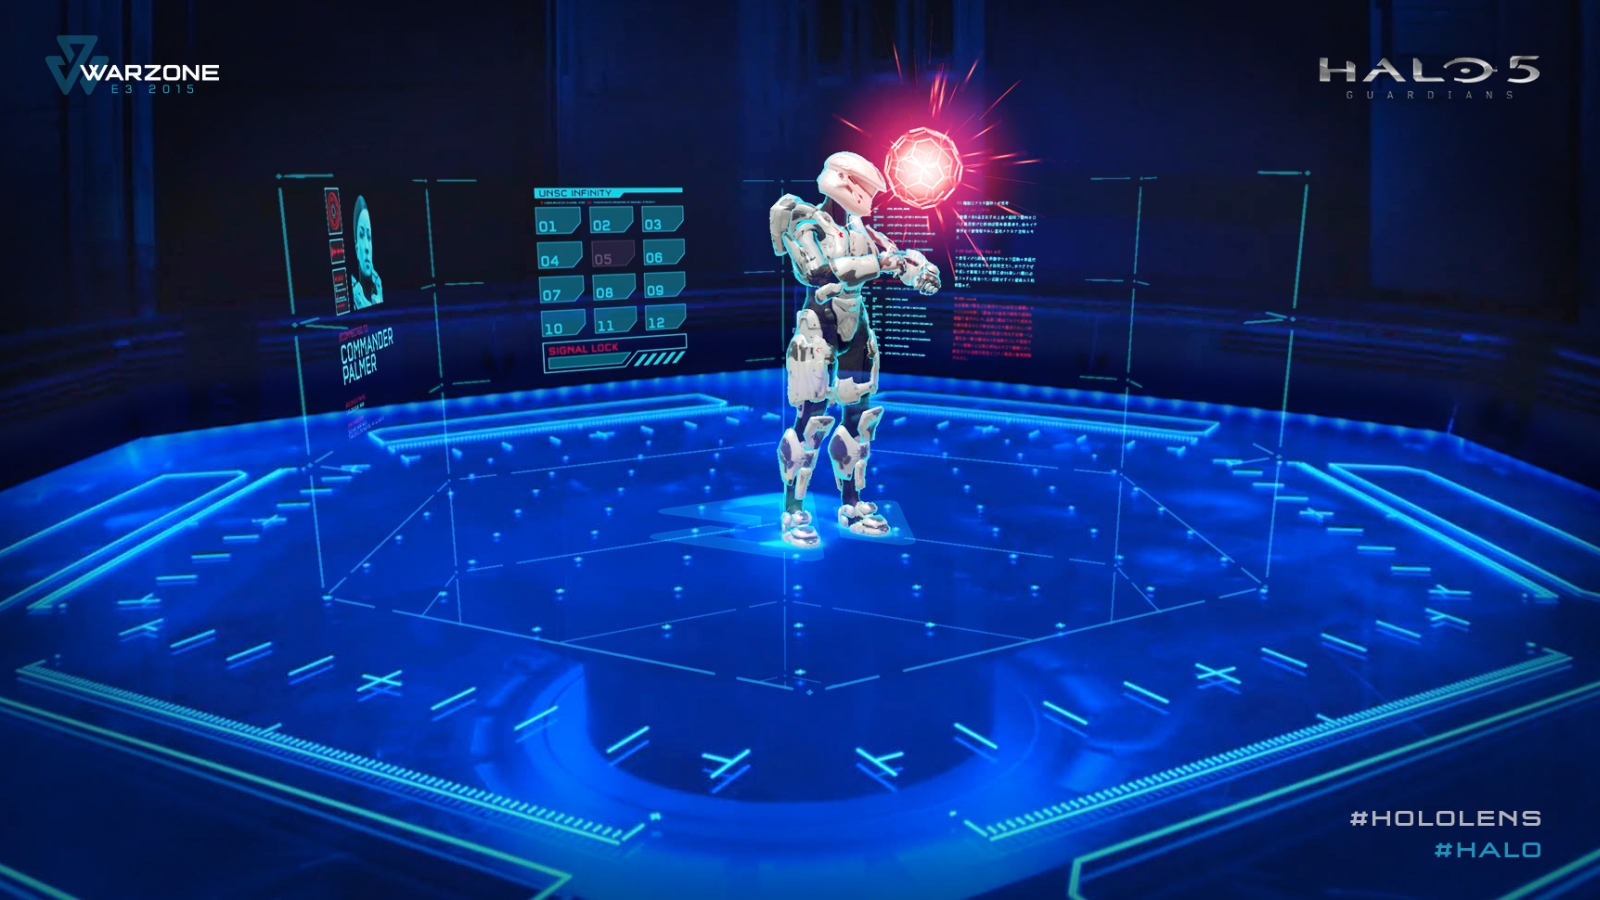 HoloLens Halo Warzone E3 2015 demo